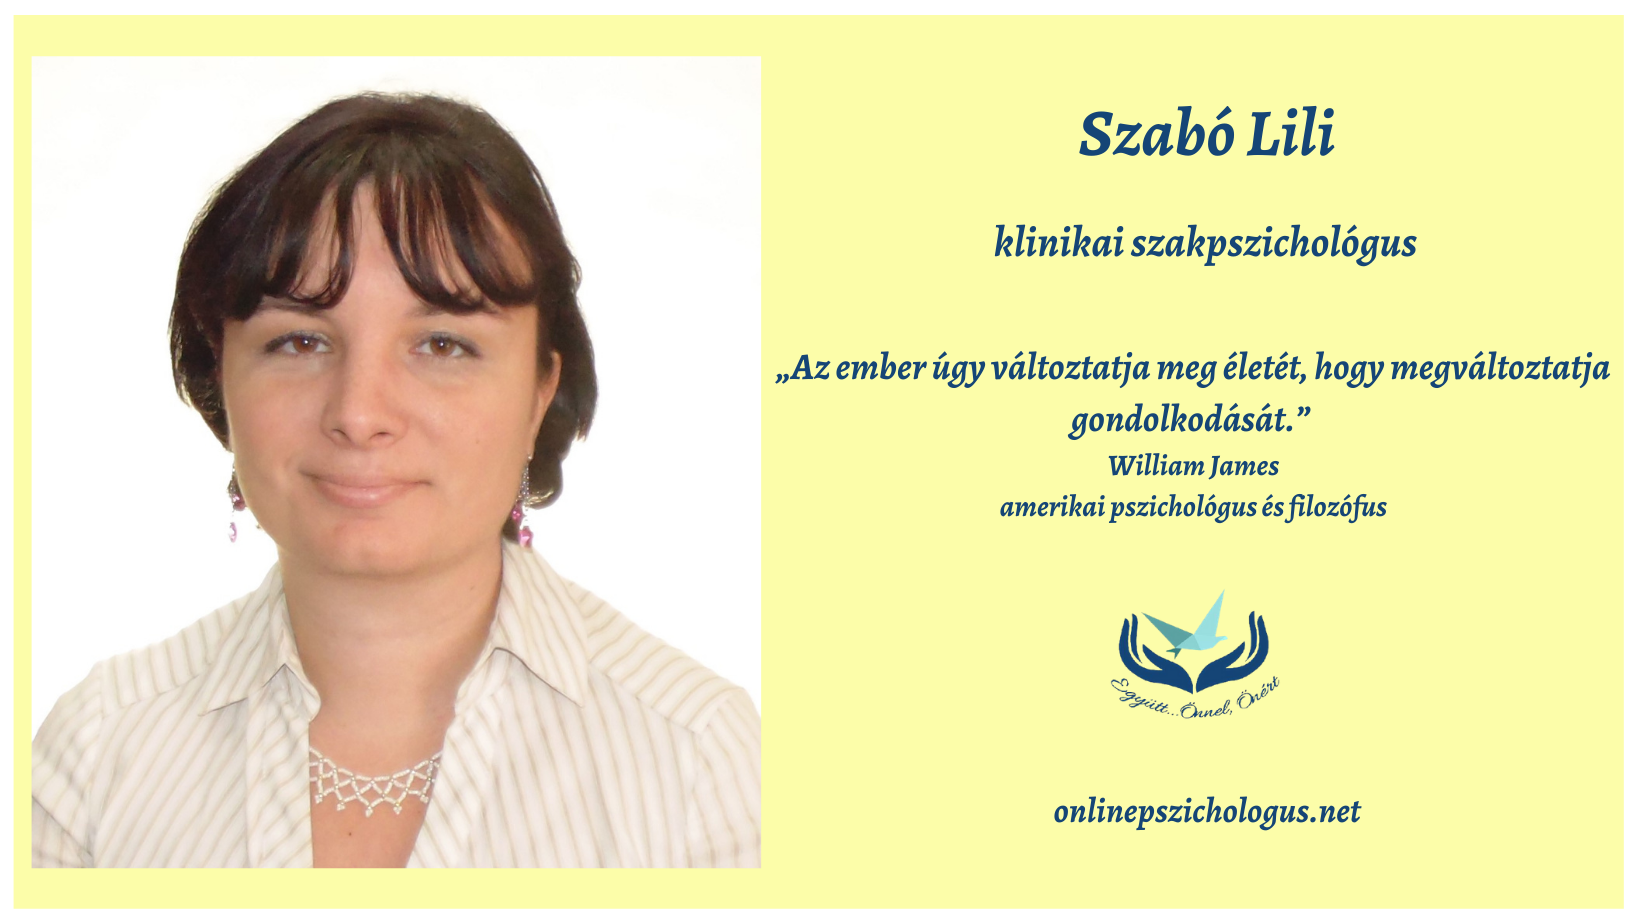 Szabó Lili online pszichológus